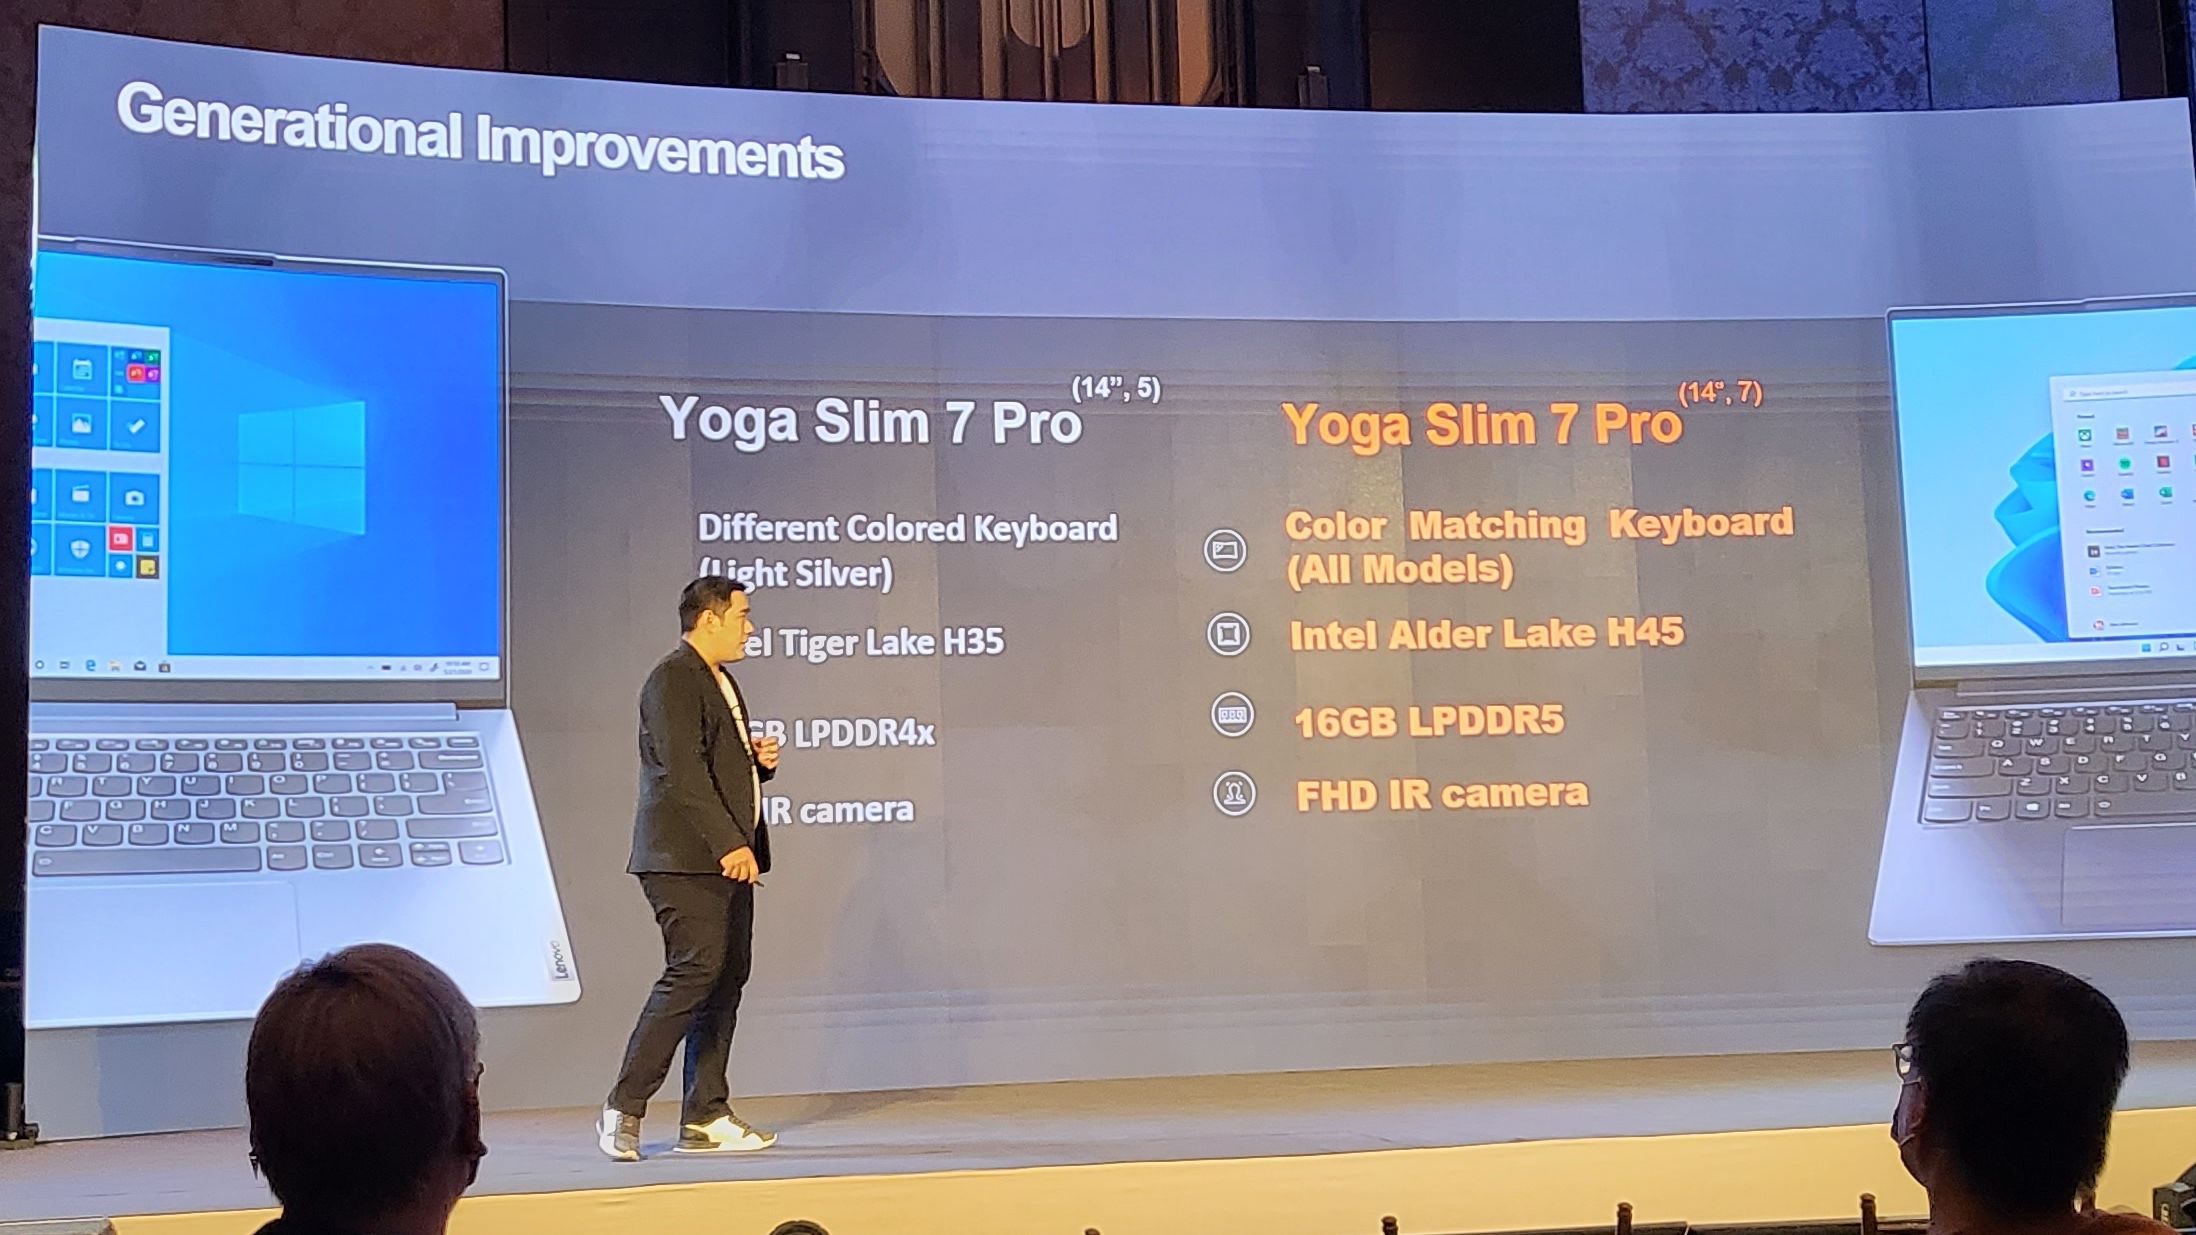 Lenovo เปิดตัว 7 โน้ตบุ๊คตระกูล Yoga ปี 2022 จัดเต็มทั้งชิปใหม่ Intel, AMD จอ 4K OLED / 3K 120Hz ดีไซน์หรูหราและบางเบา